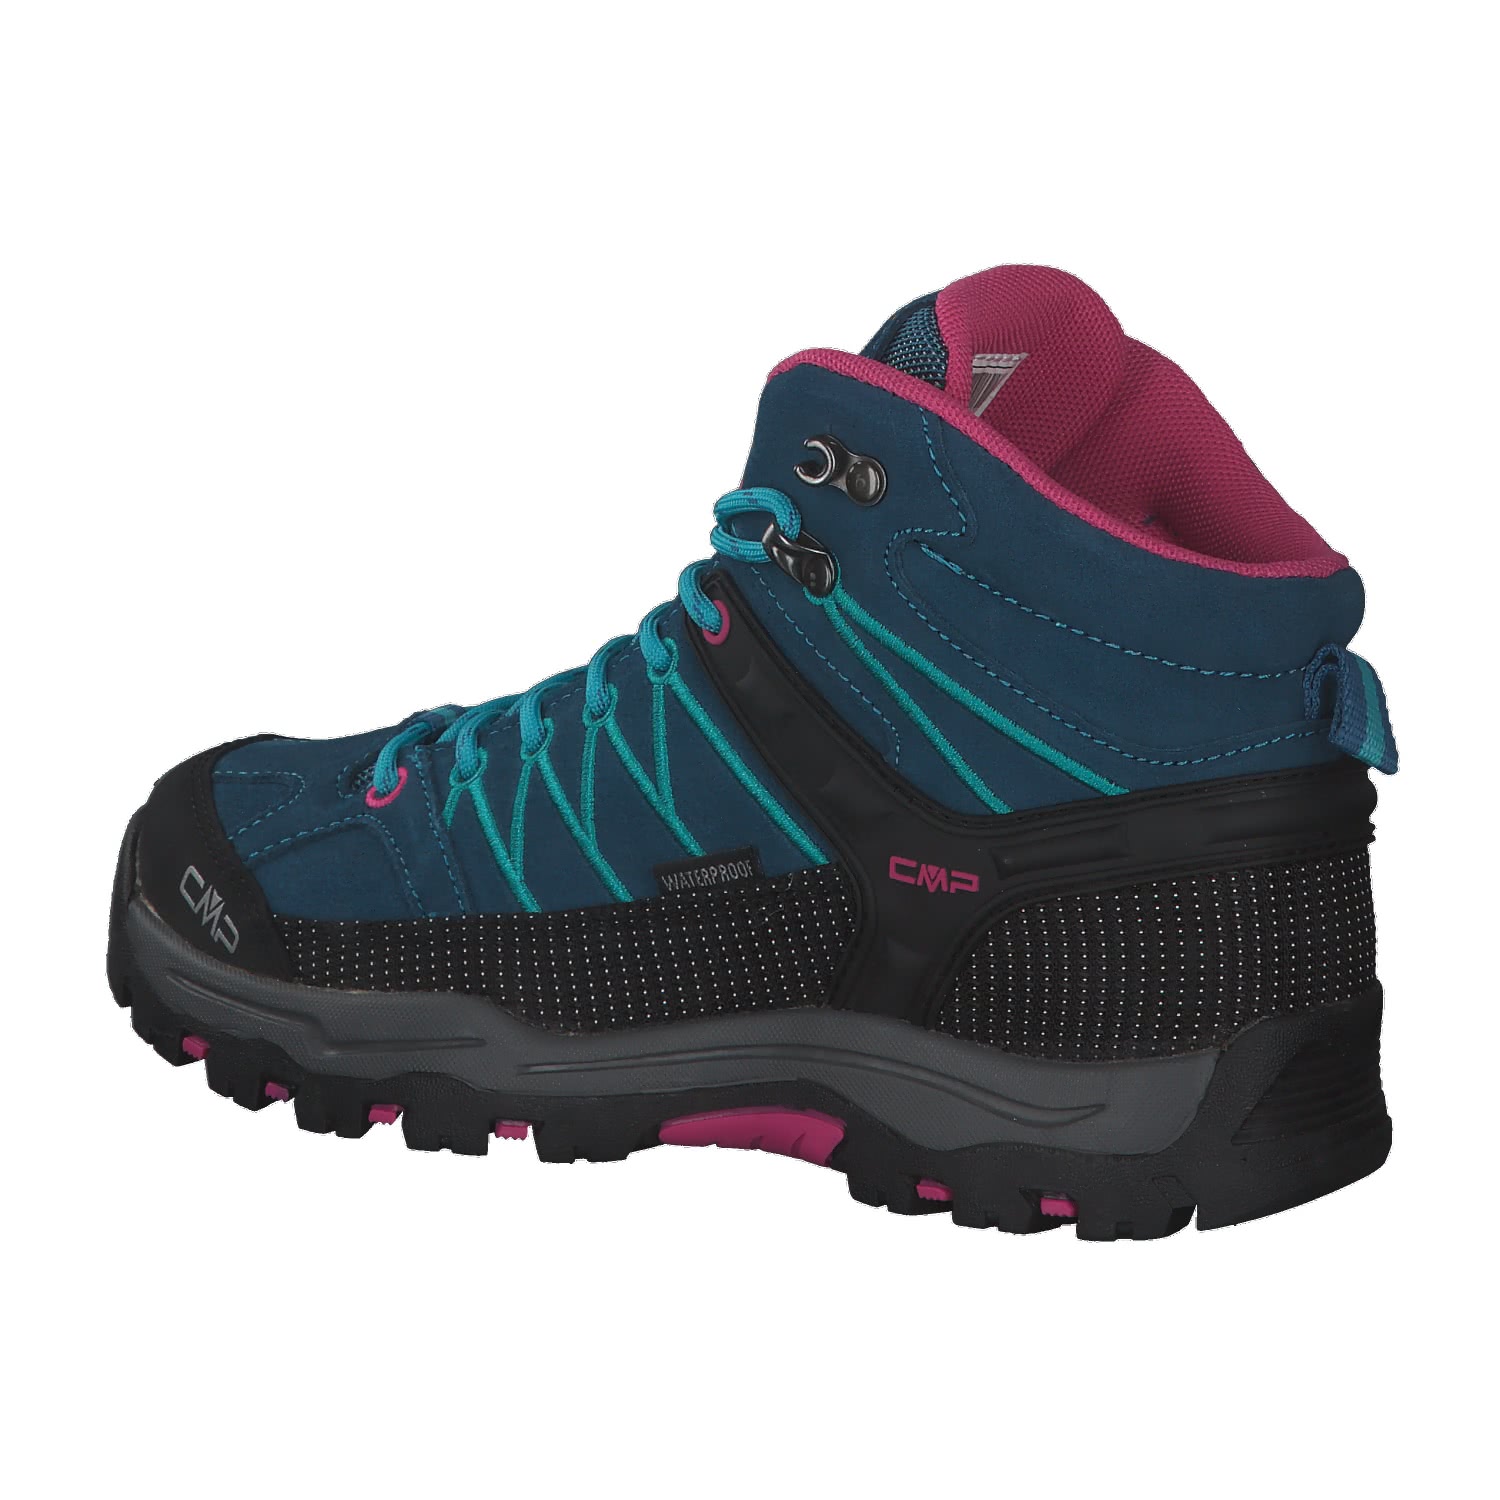 CMP Kinder Trekking Schuhe 3Q12944J MID | eBay Rigel